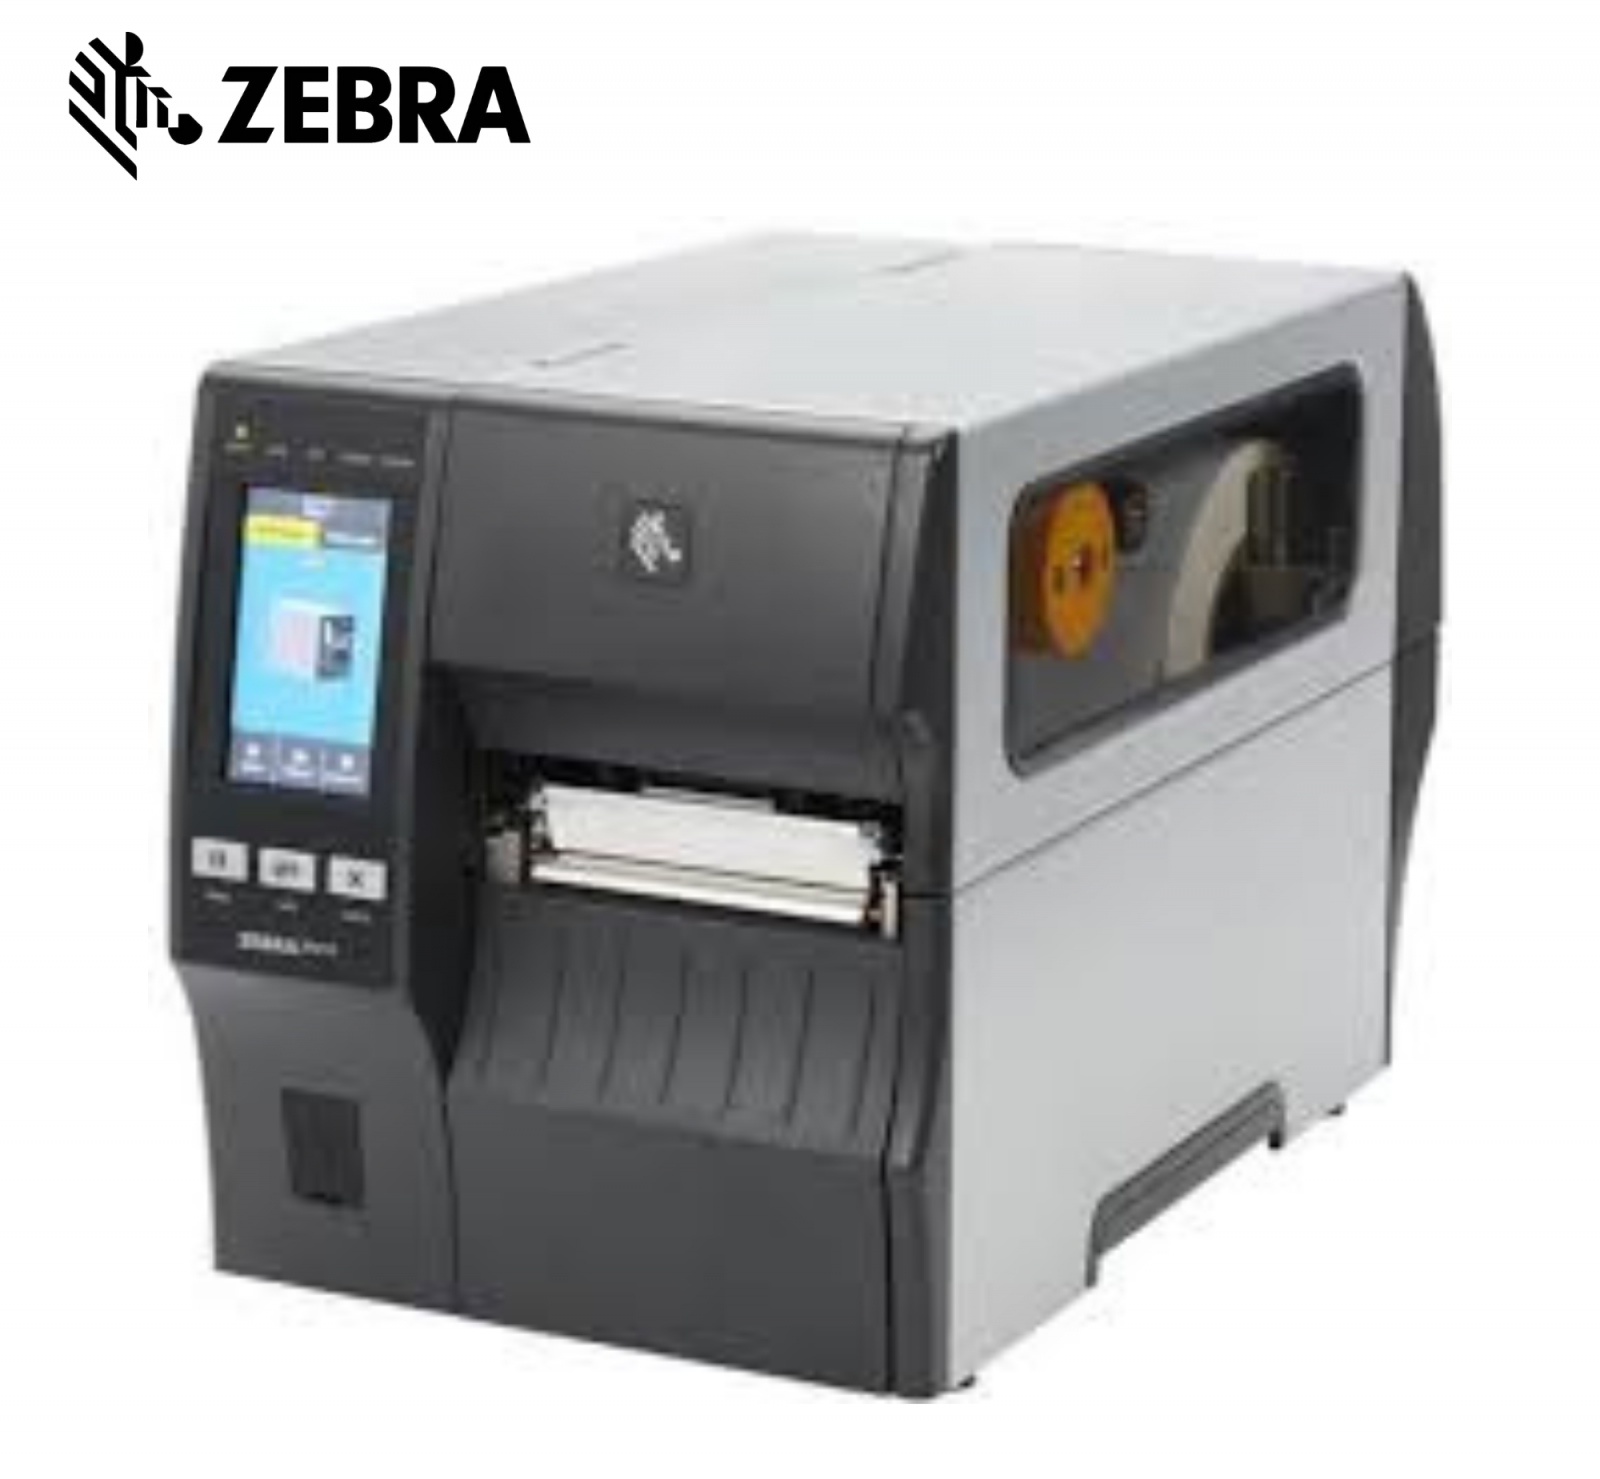 Zebra Zt231 Label Printer Malaysia Zebra Distributor 9417